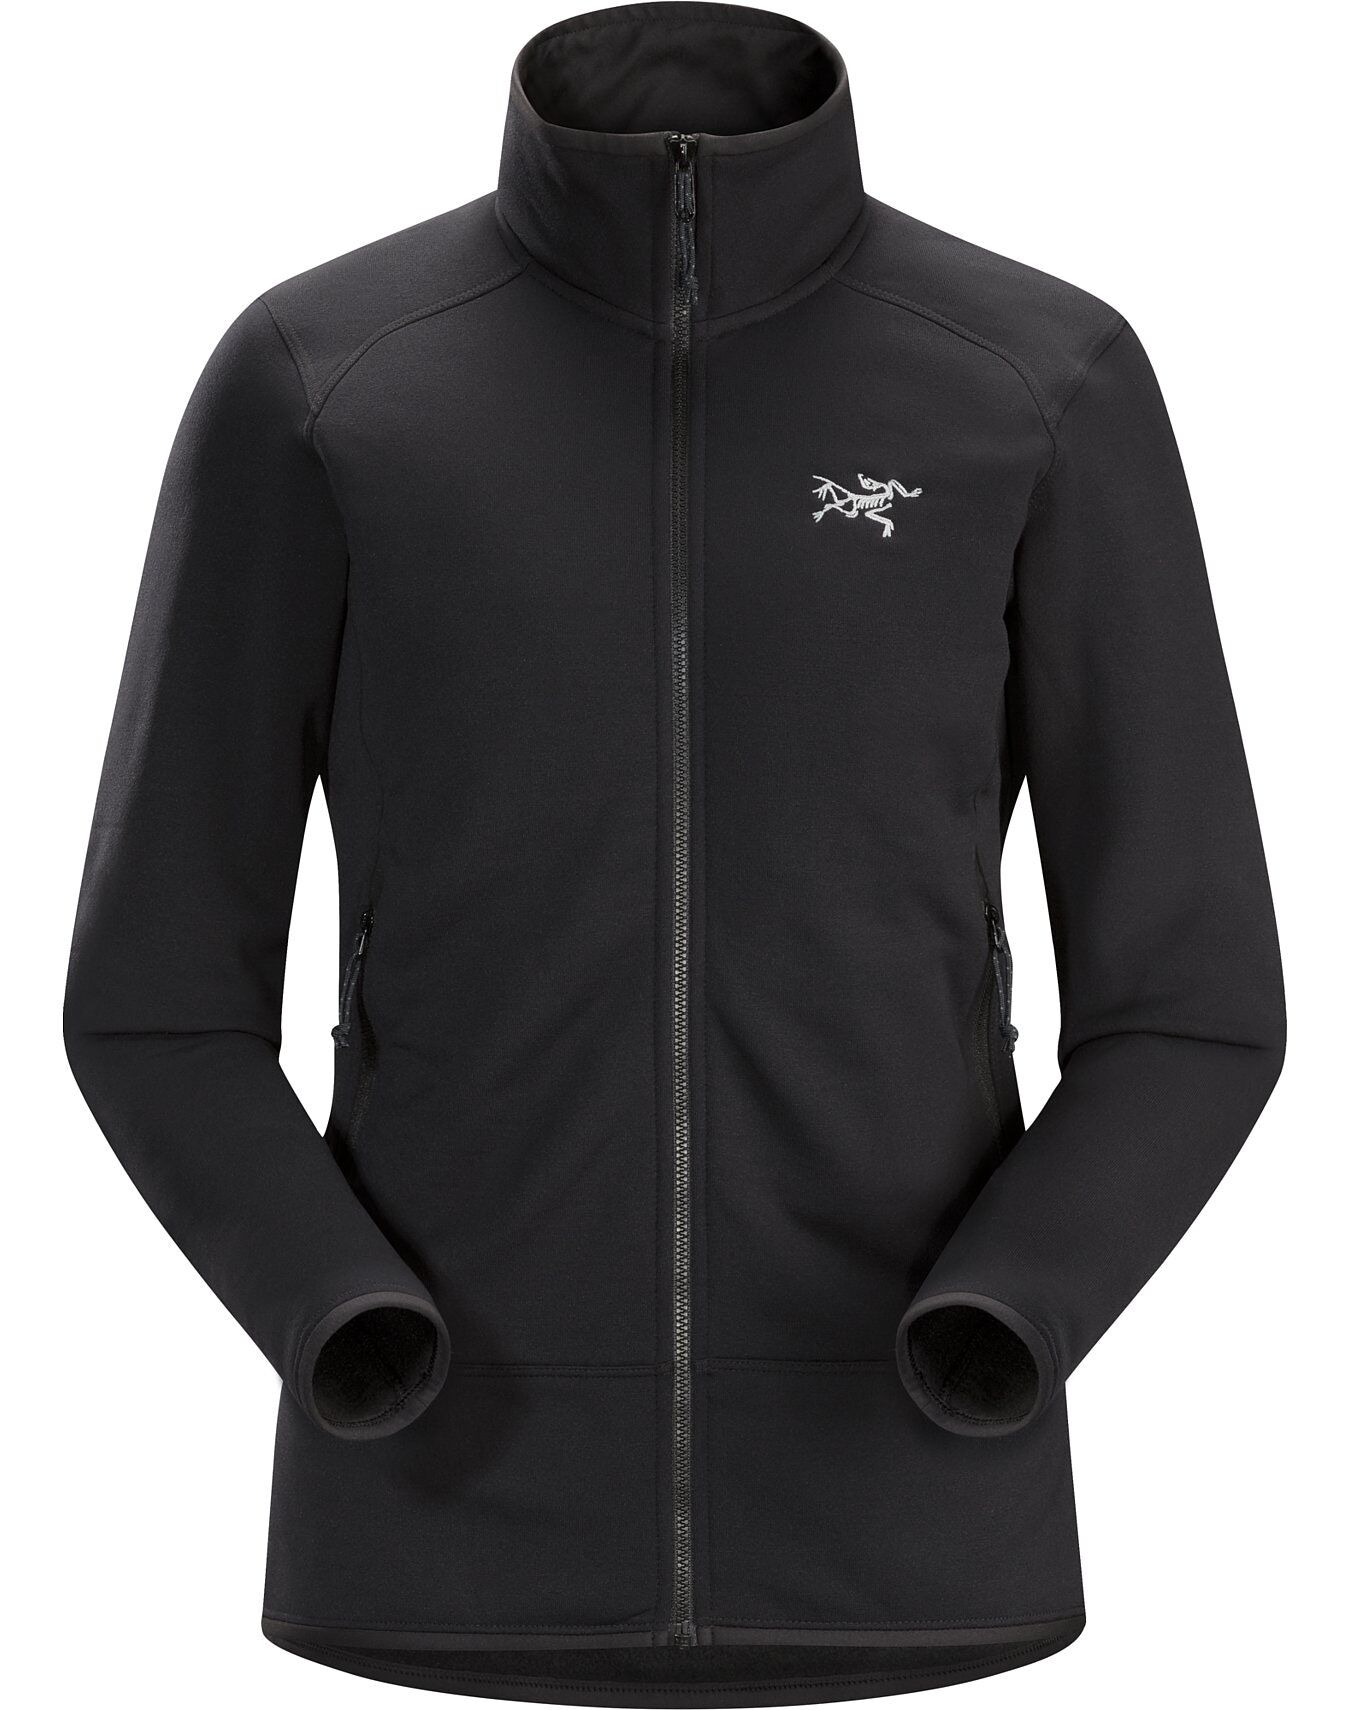 Arc'teryx Kyanite Jacket - Fleece jacket - Women's